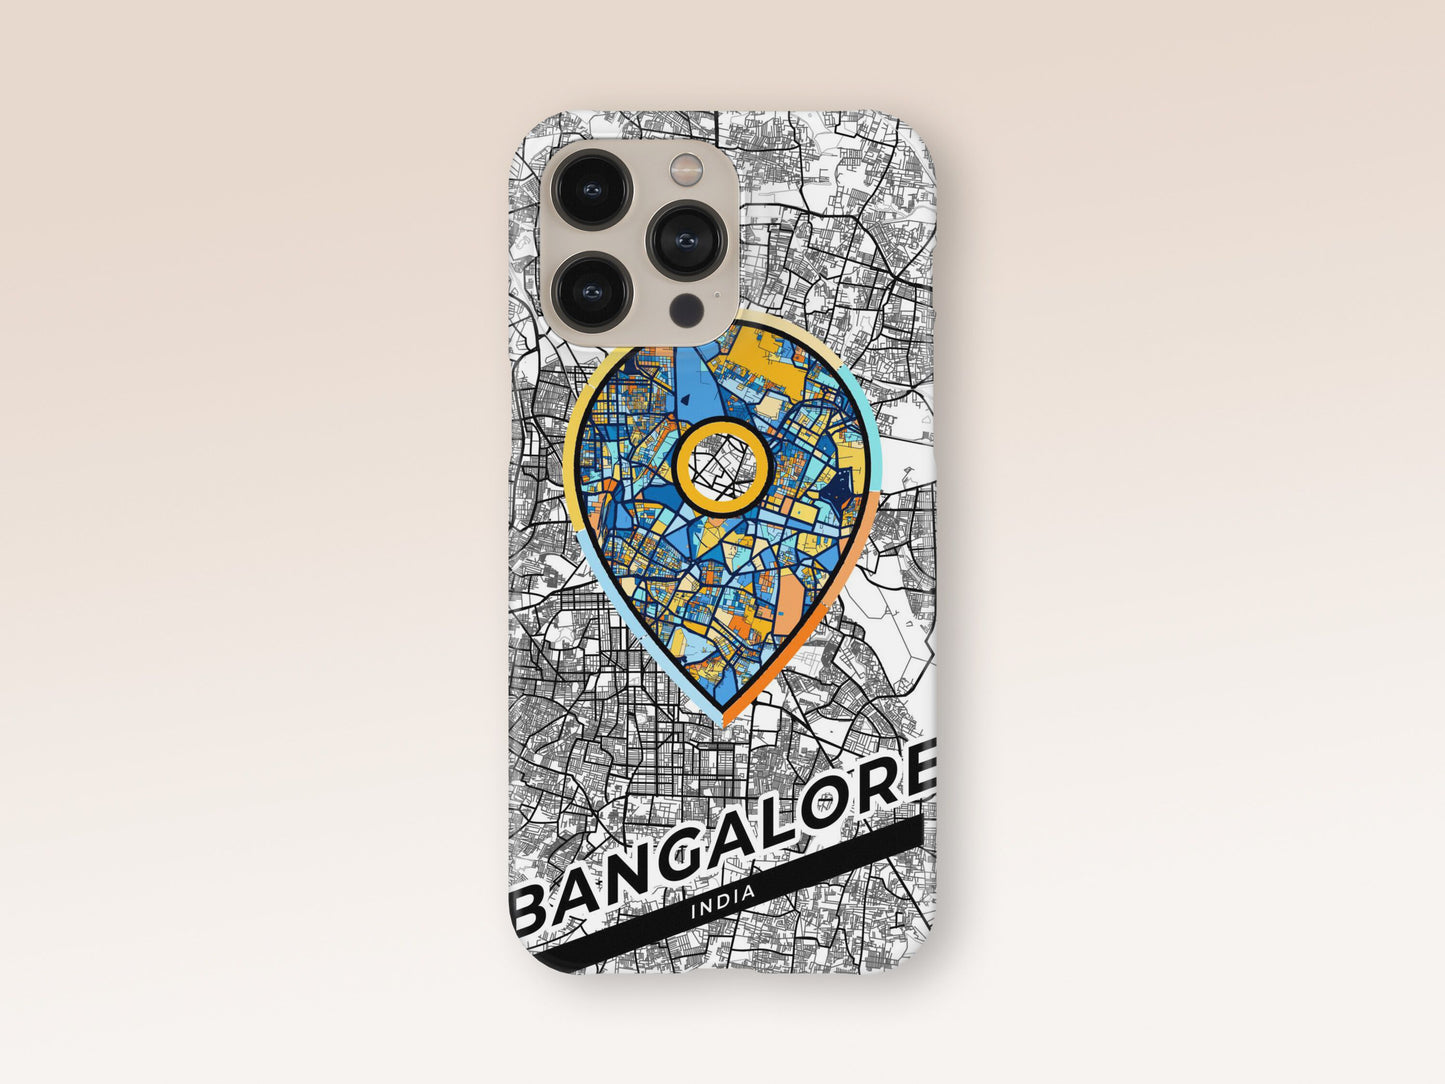 Bangalore India slim phone case with colorful icon. Birthday, wedding or housewarming gift. Couple match cases. 1